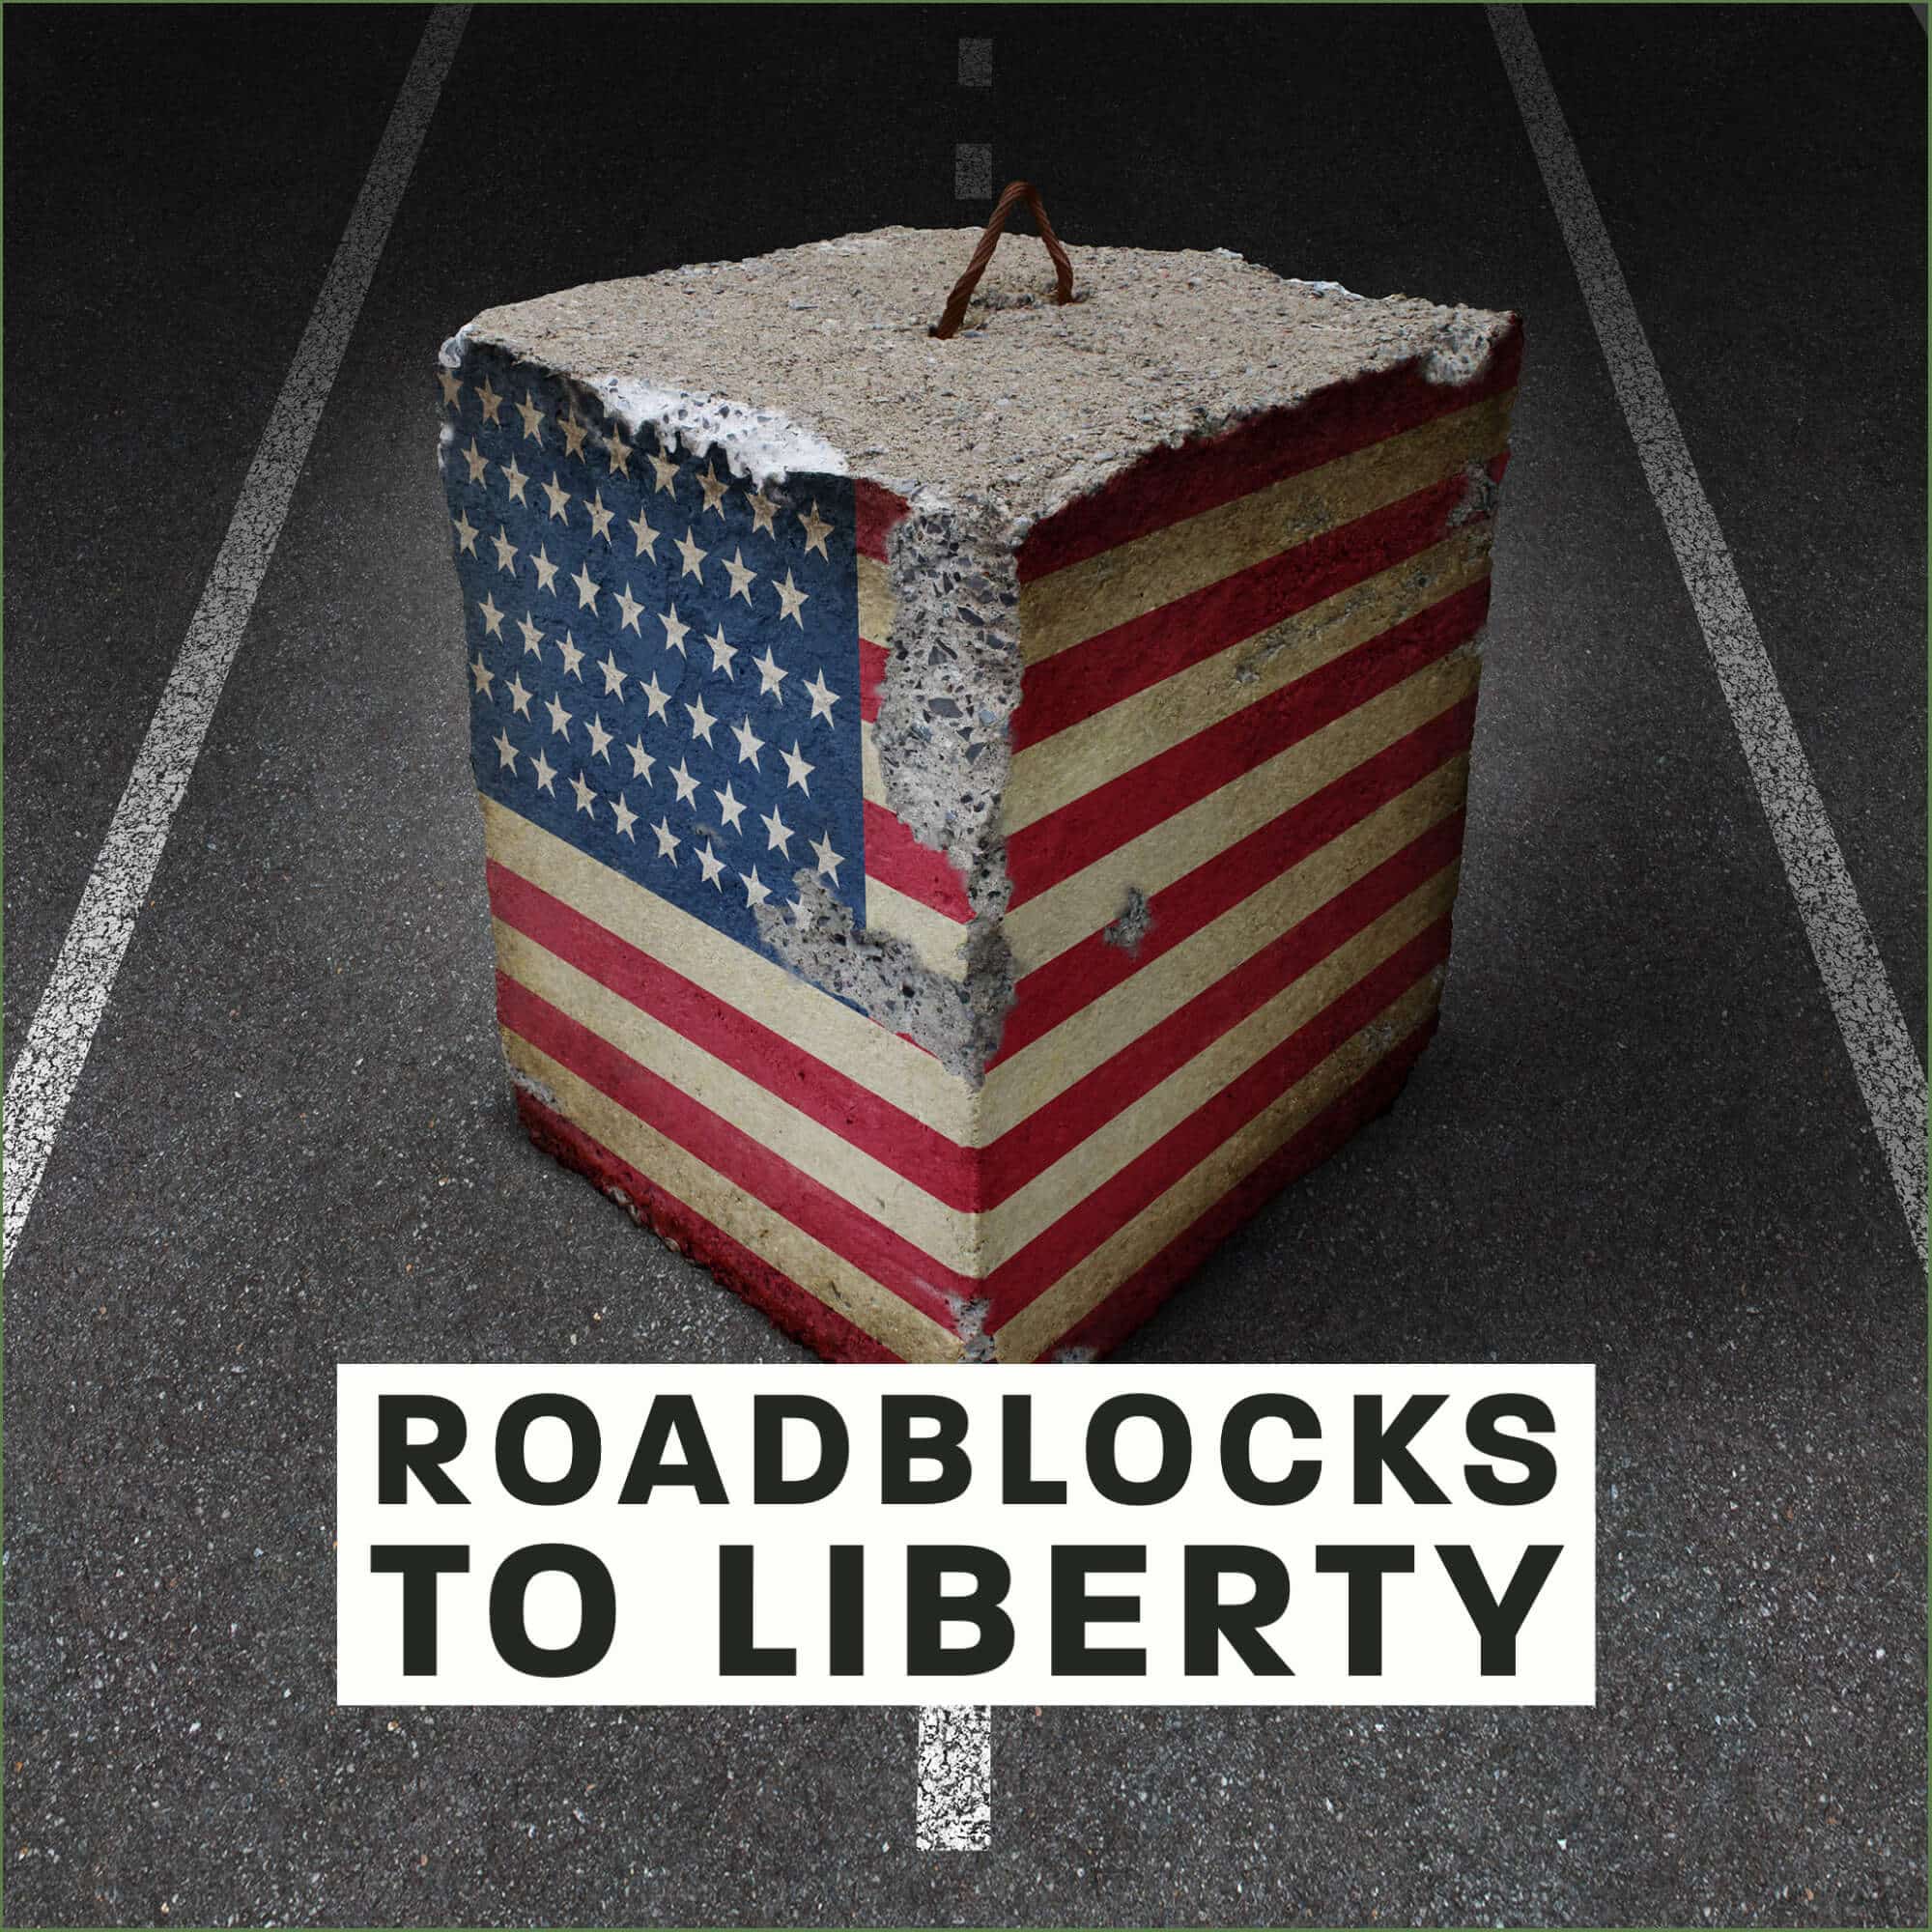 Top-4 Roadblocks to Liberty